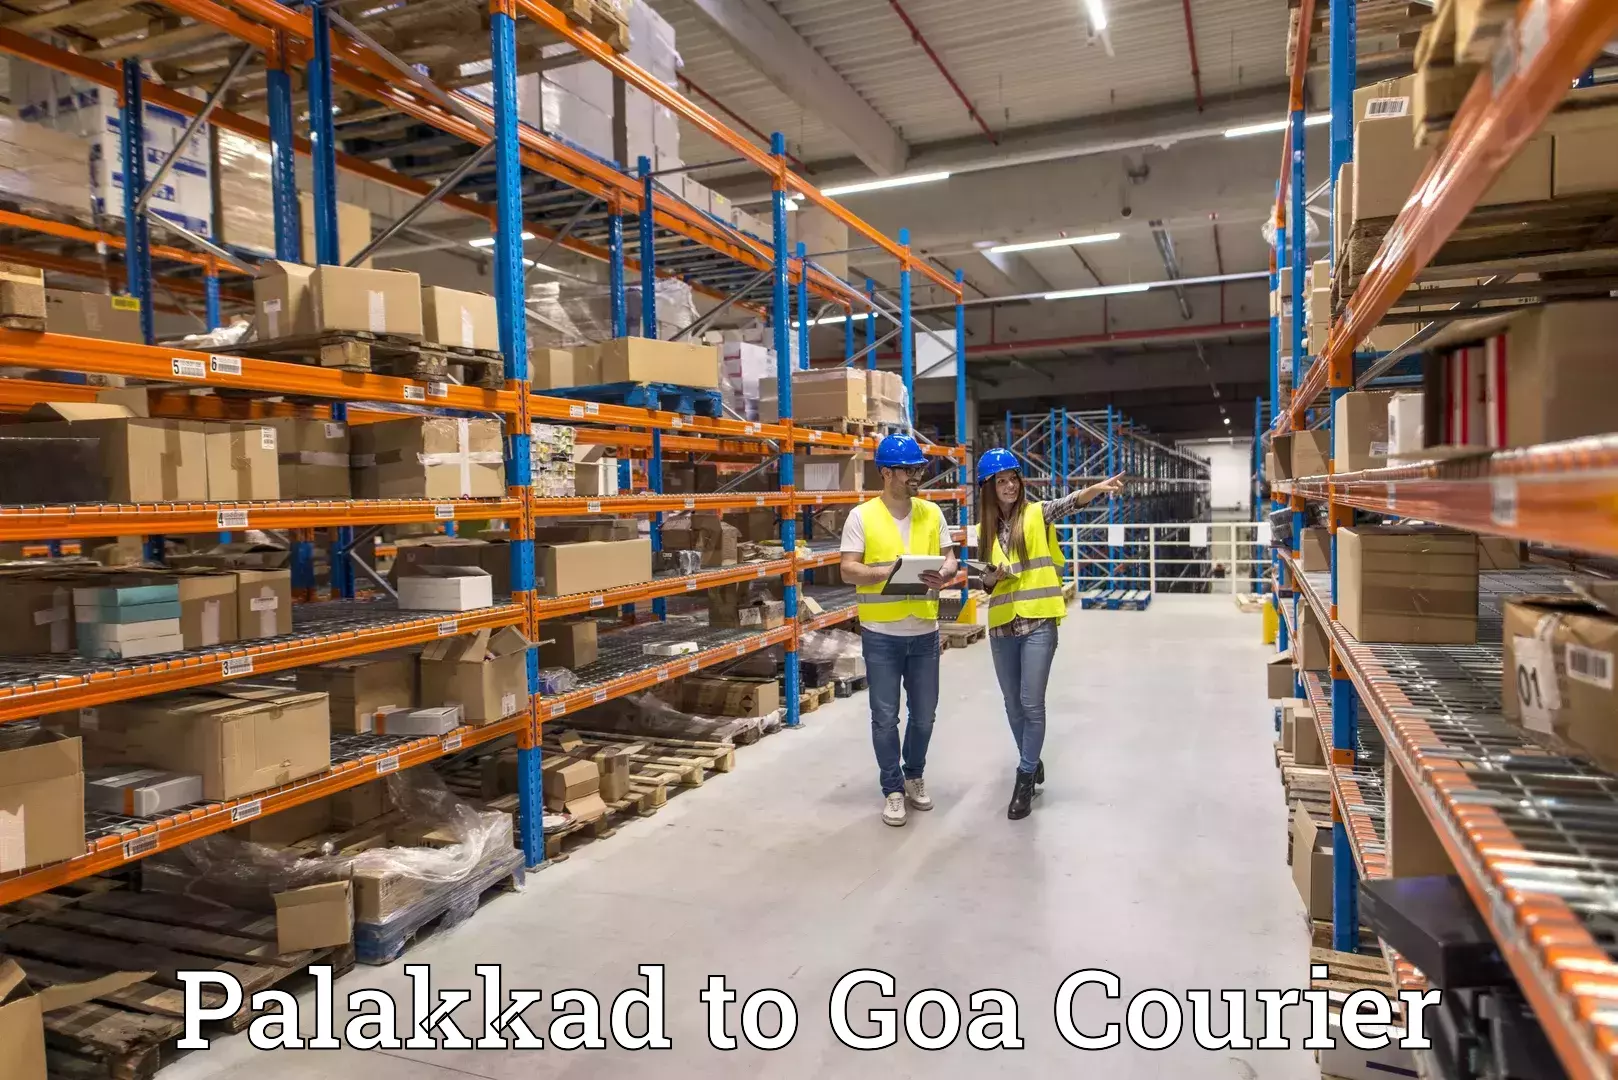 User-friendly courier app Palakkad to Vasco da Gama